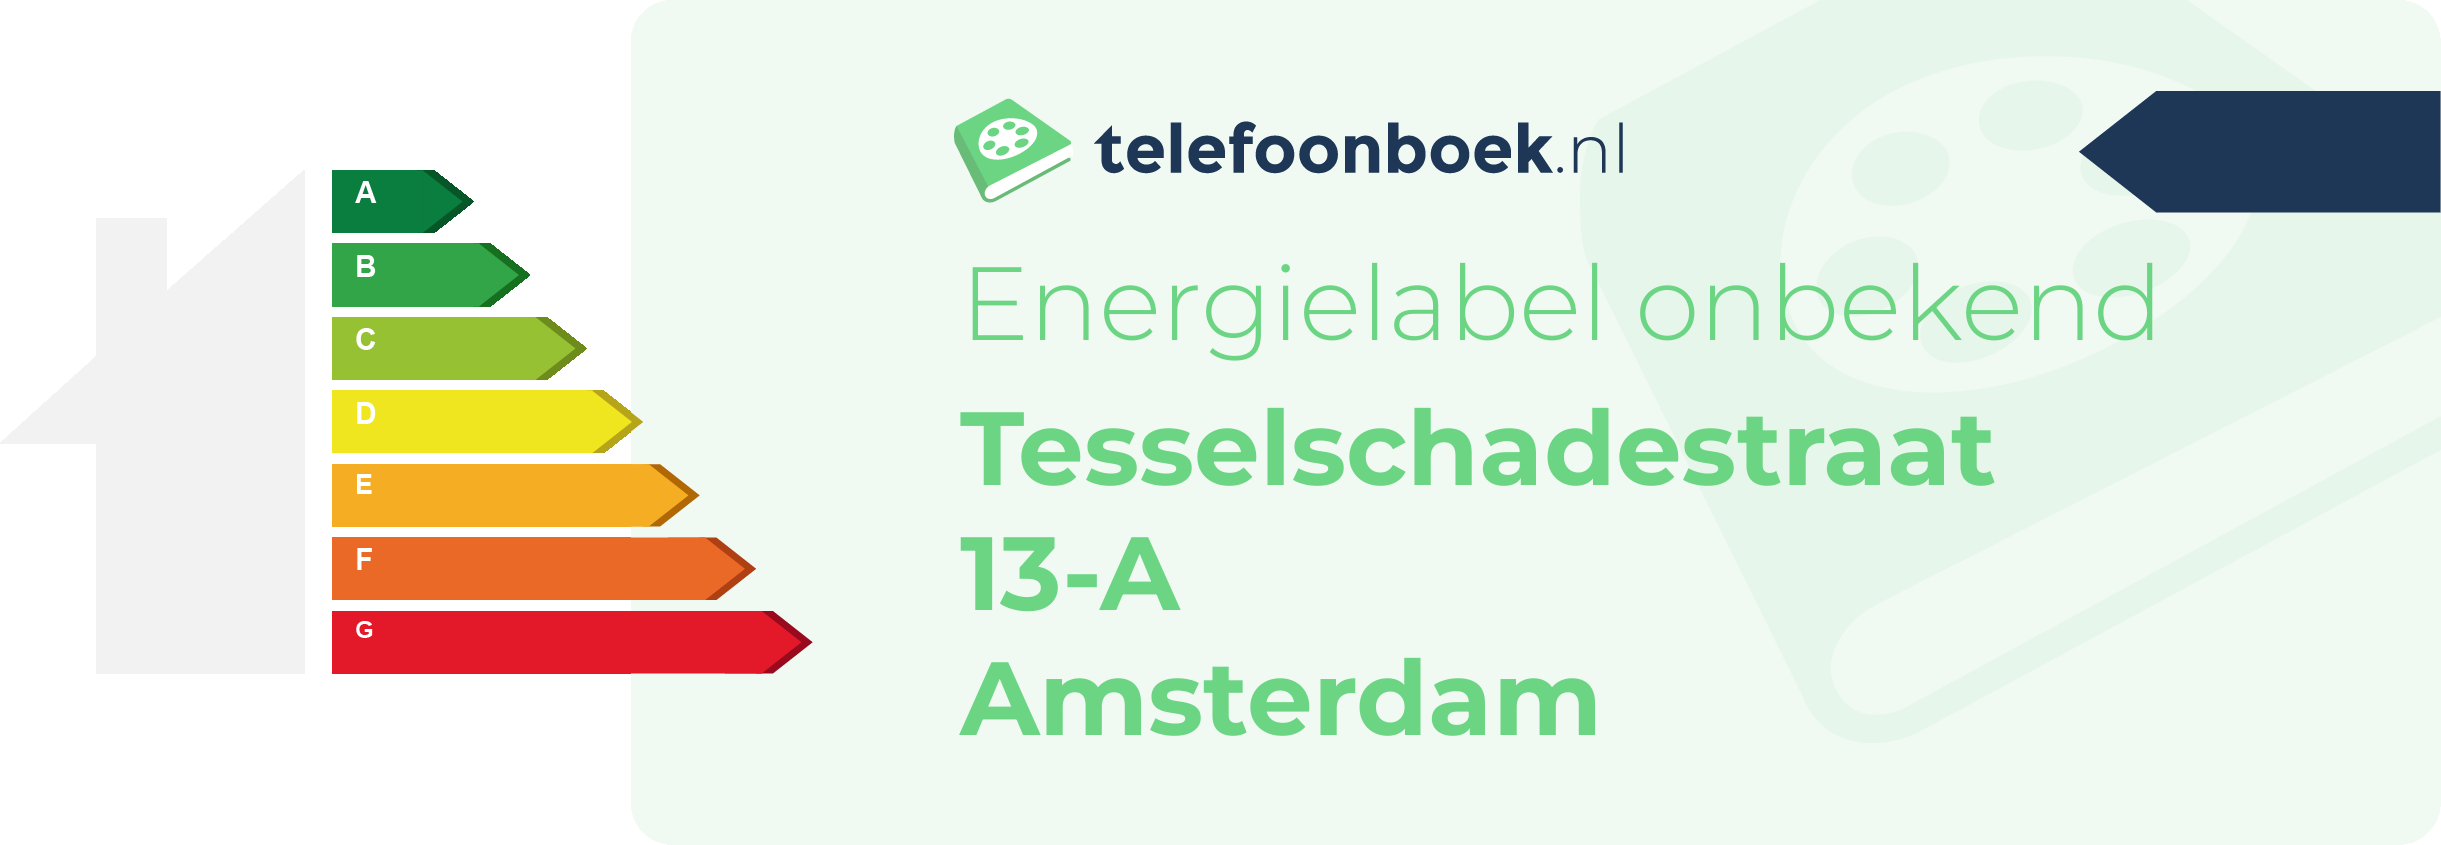 Energielabel Tesselschadestraat 13-A Amsterdam